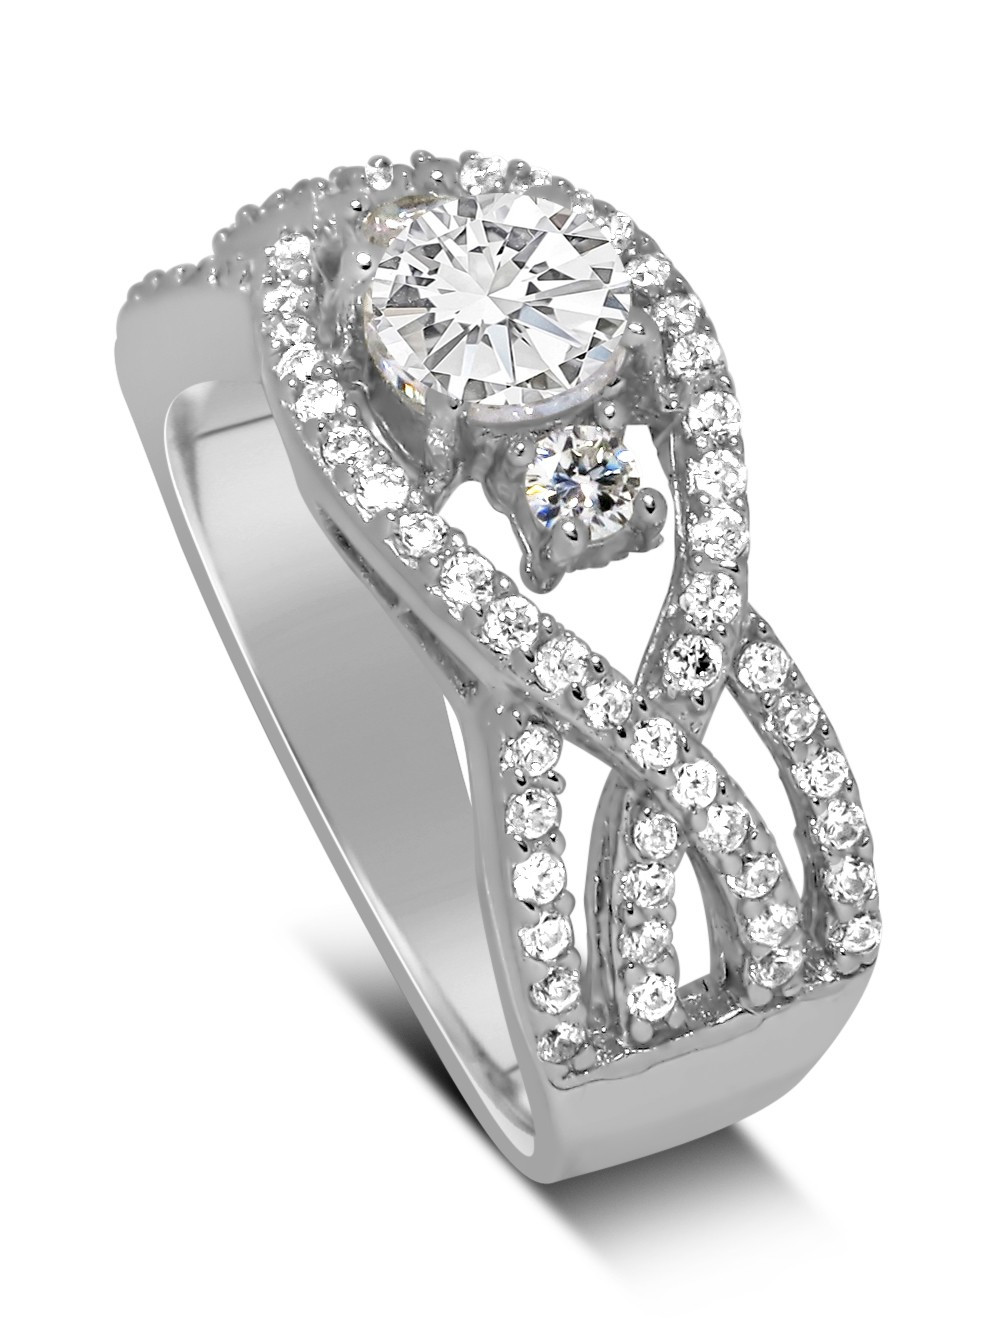 Designer Diamond Engagement Rings
 Perfect Designer 1 carat Round Diamond Engagement Ring for